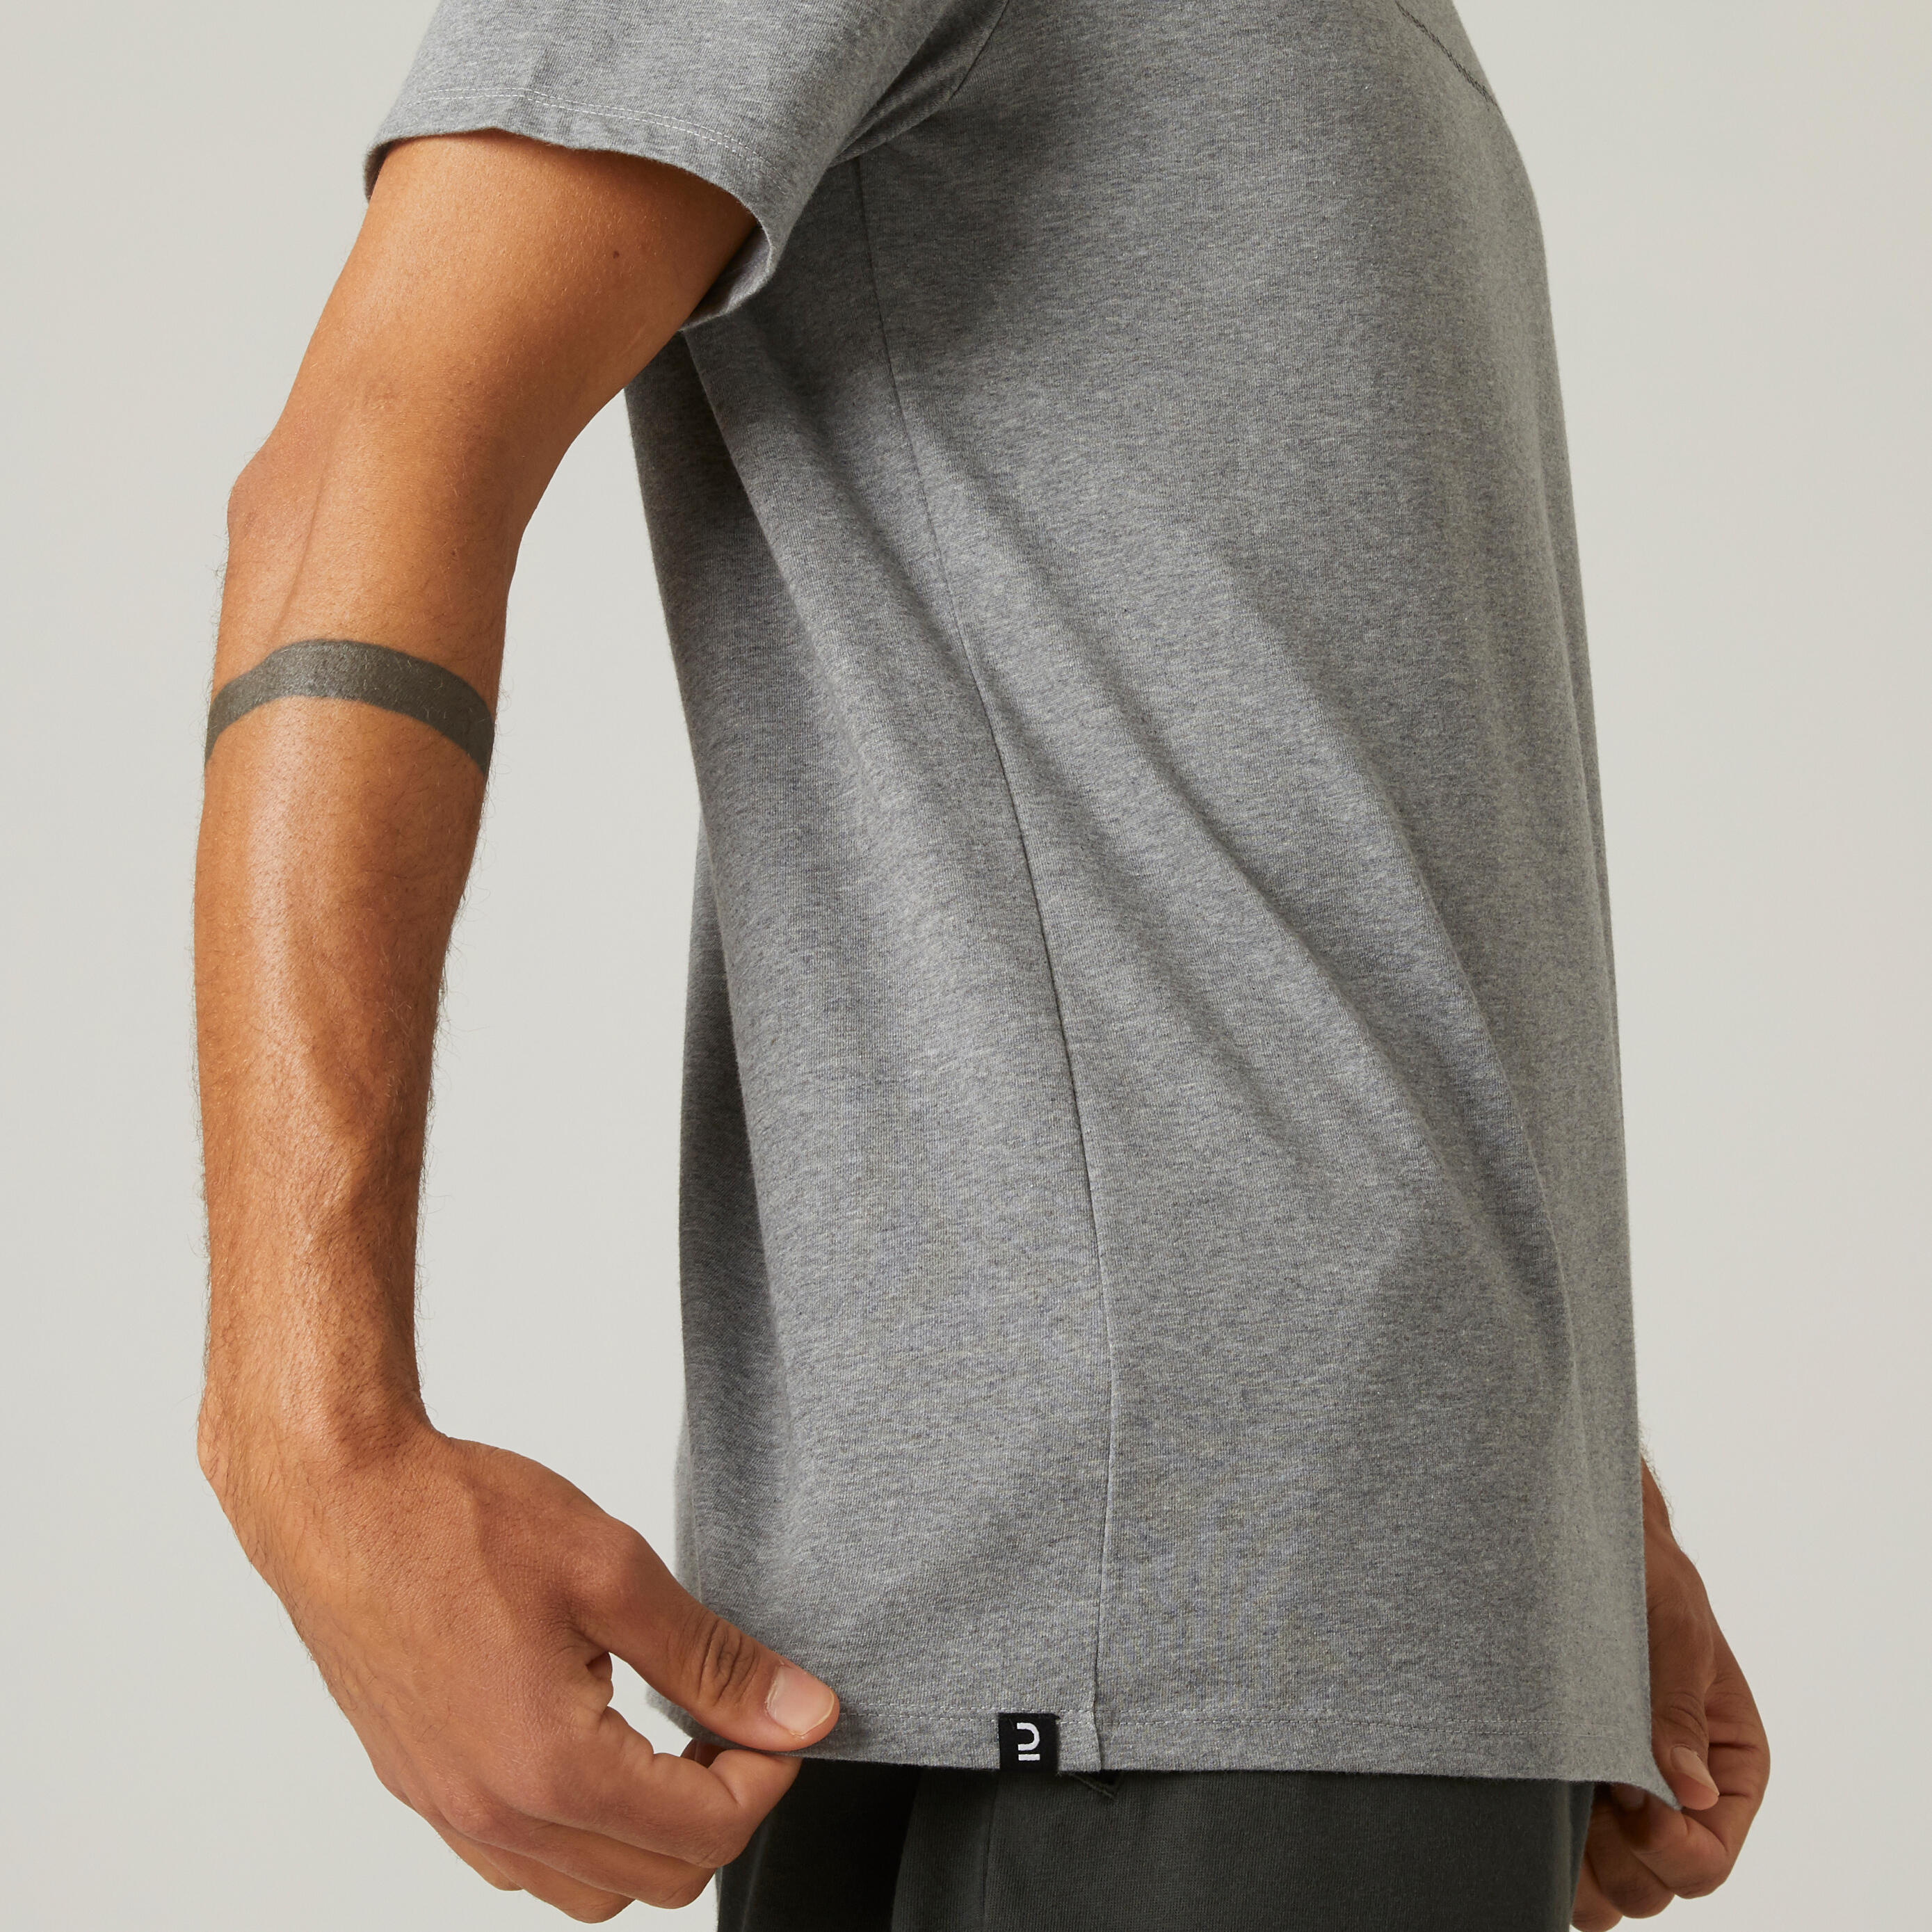 Men's Short-Sleeved Straight-Cut Crew Neck Cotton Fitness T-Shirt 500 - Blue/Grey 6/7